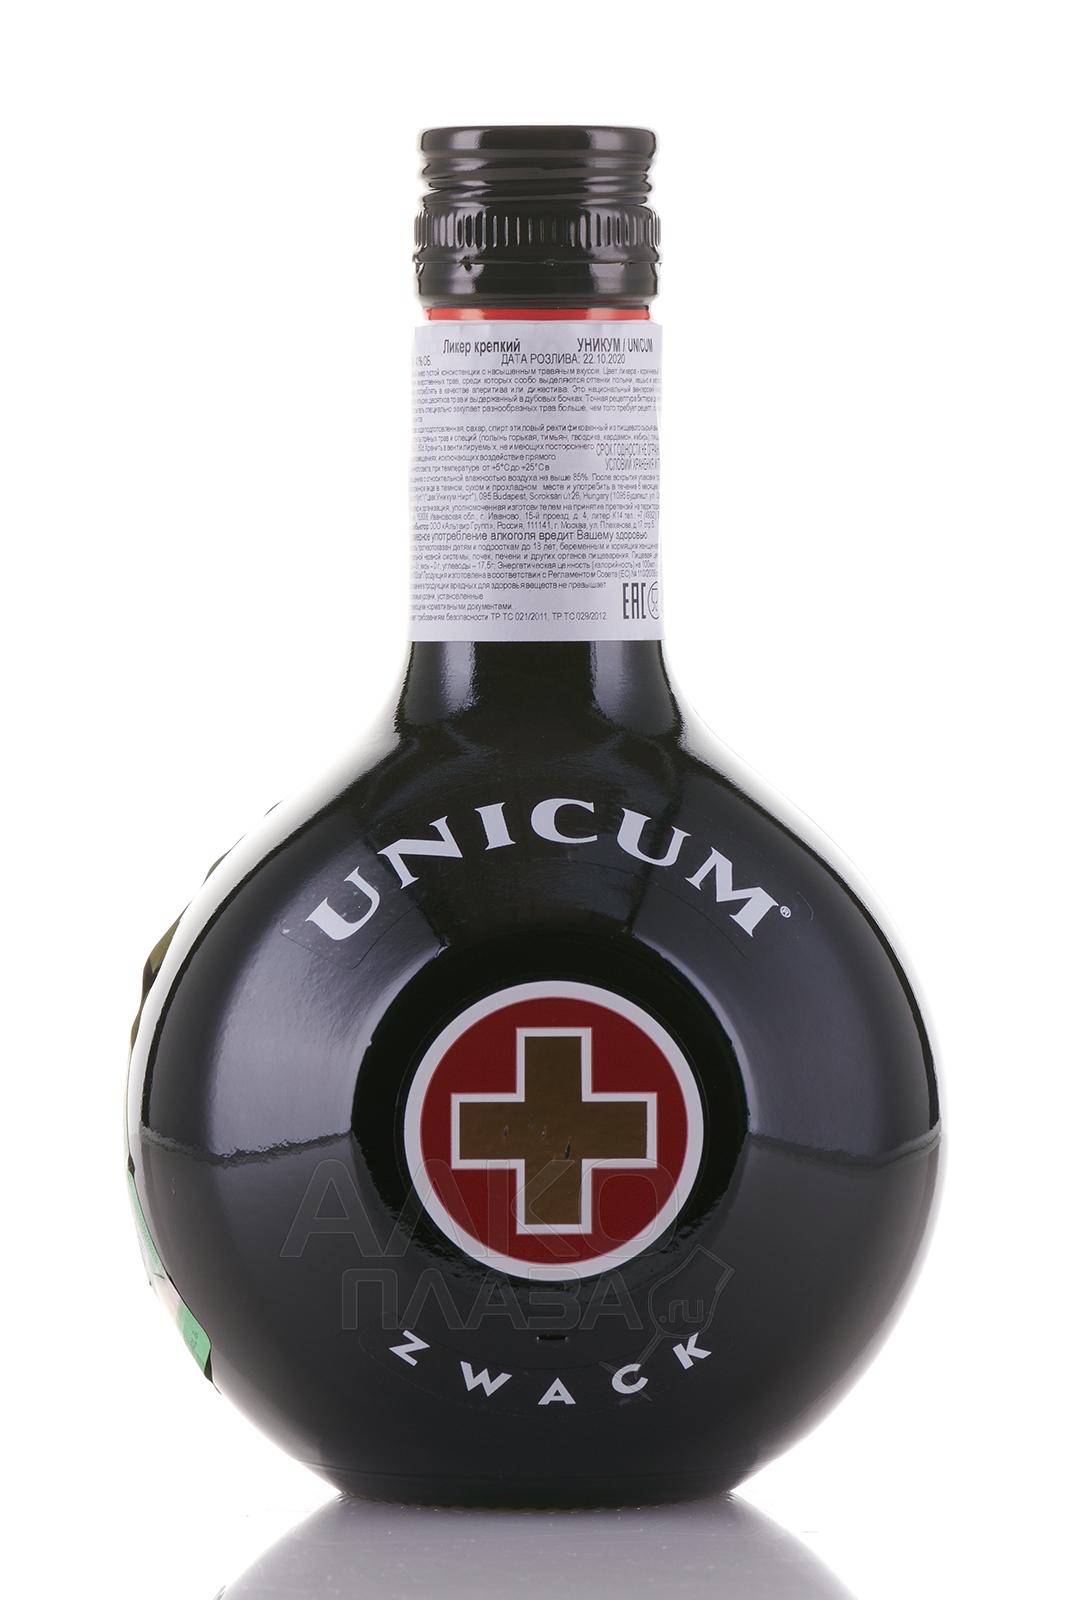 Zwack Unicum -  ликер Цвак Уникум 0.5 л.